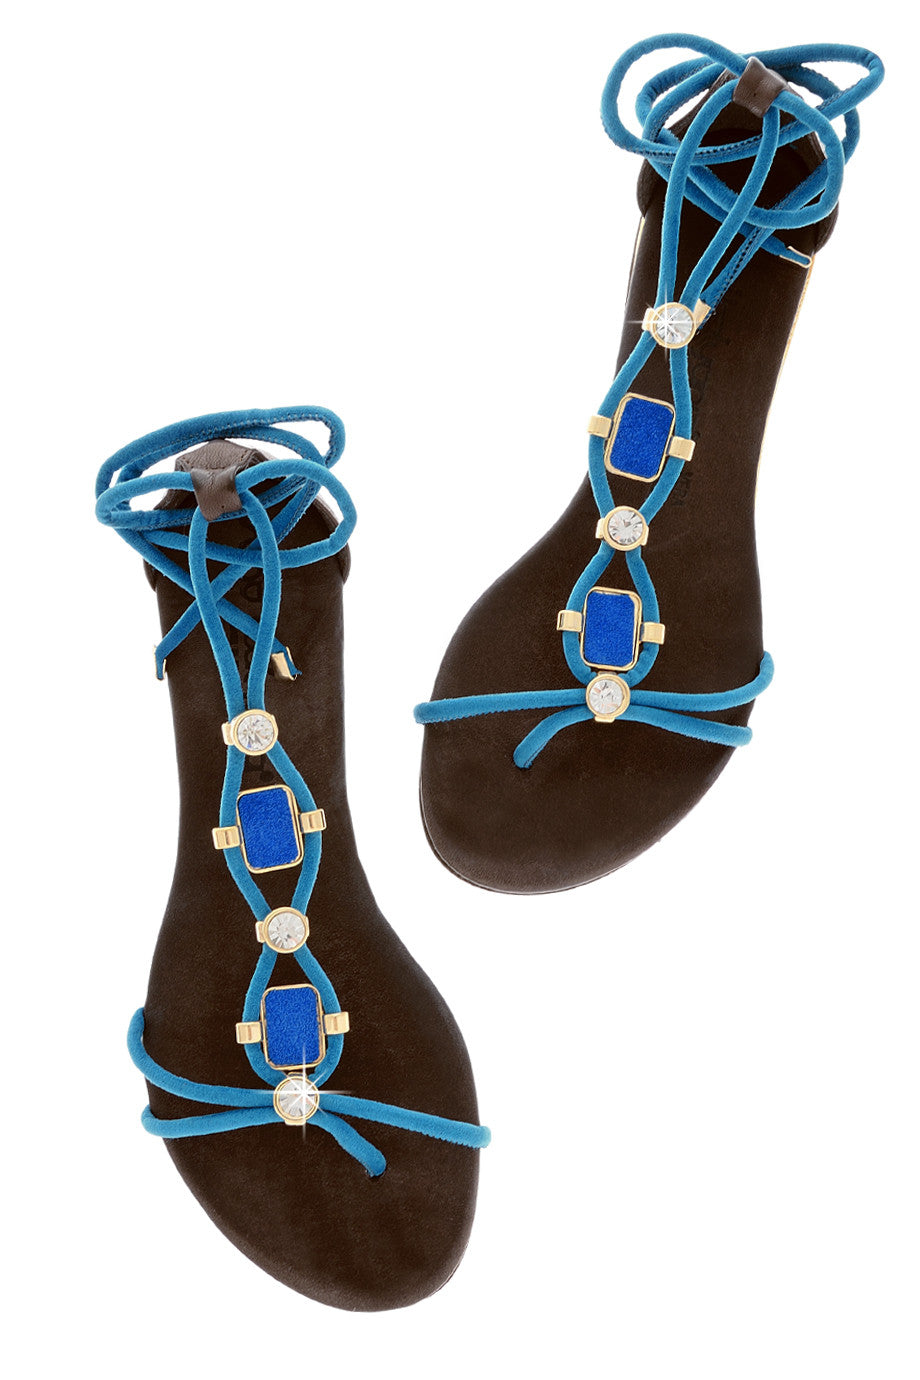 Indigo Μπλε Σανδάλια με Κρύσταλλα - Sanabella | Γυναικεία Παπούτσια